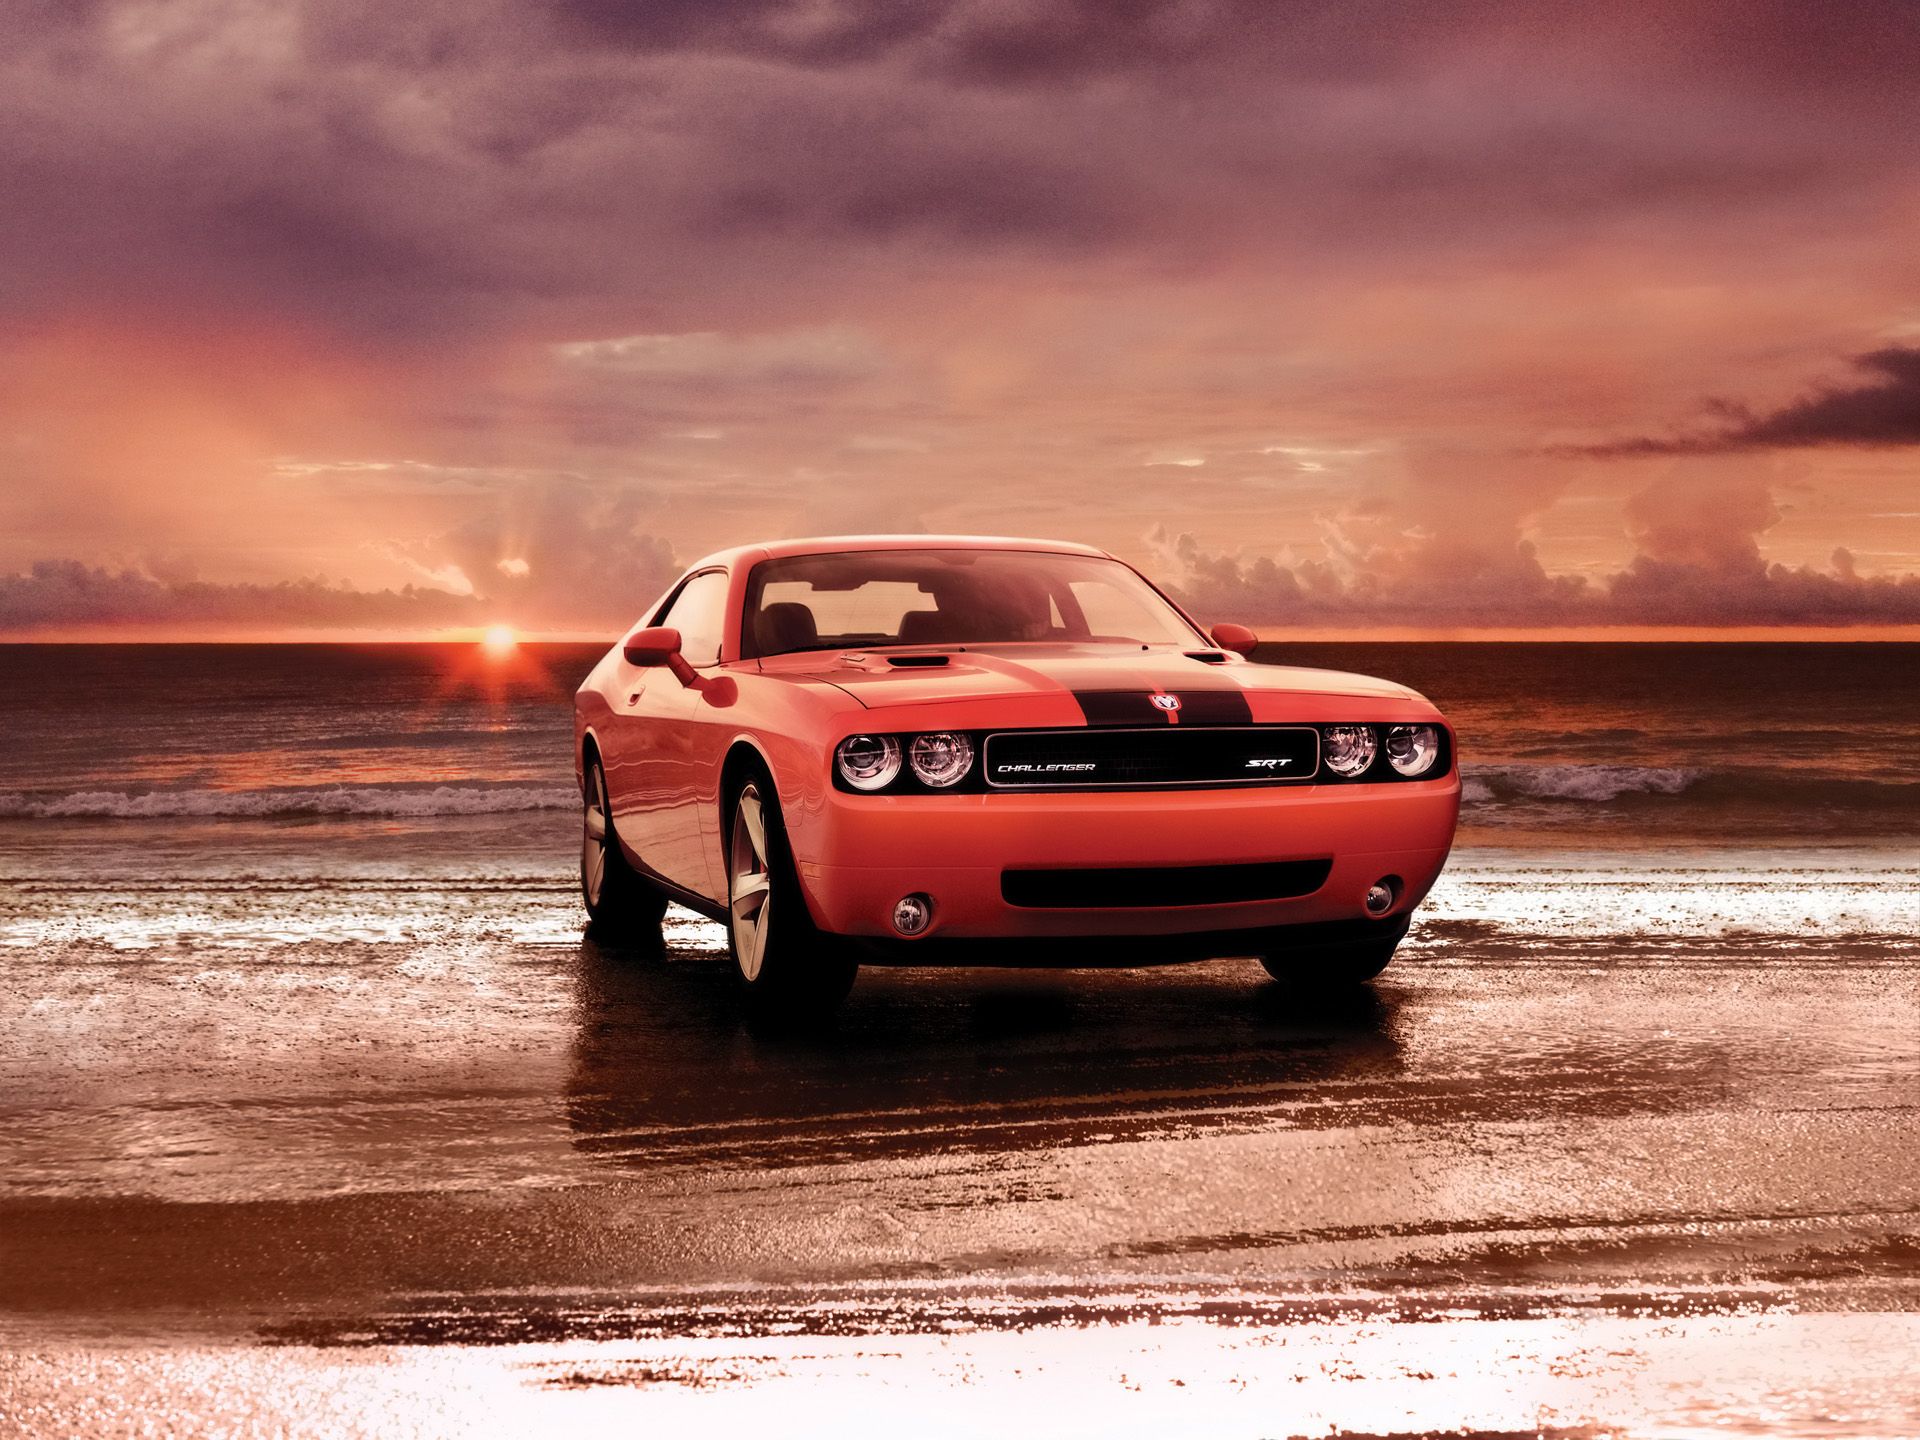 Dodge Challenger Windows 7 Cars Desktop Wallpaper. Car